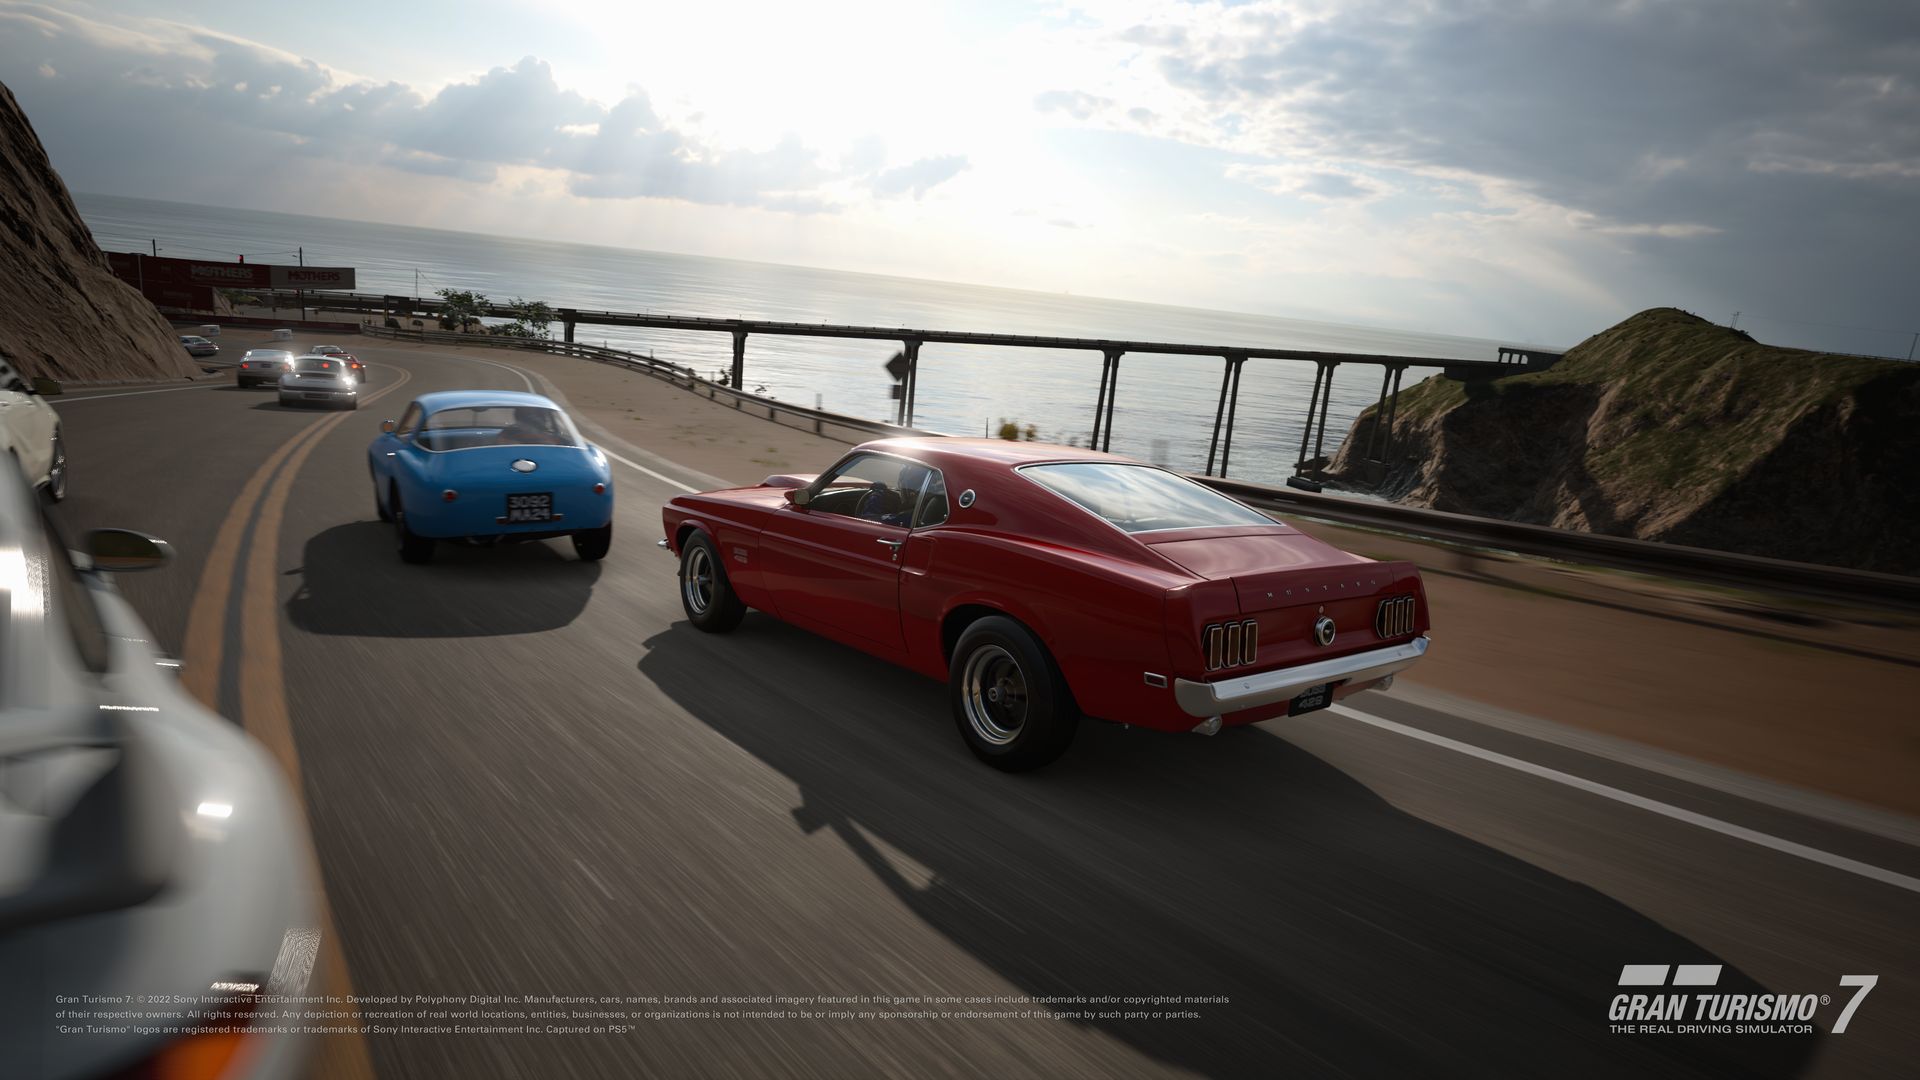 HD wallpaper: Gran Turismo 5 Citroen GT, red Citroen GT racing car, Games,  video game